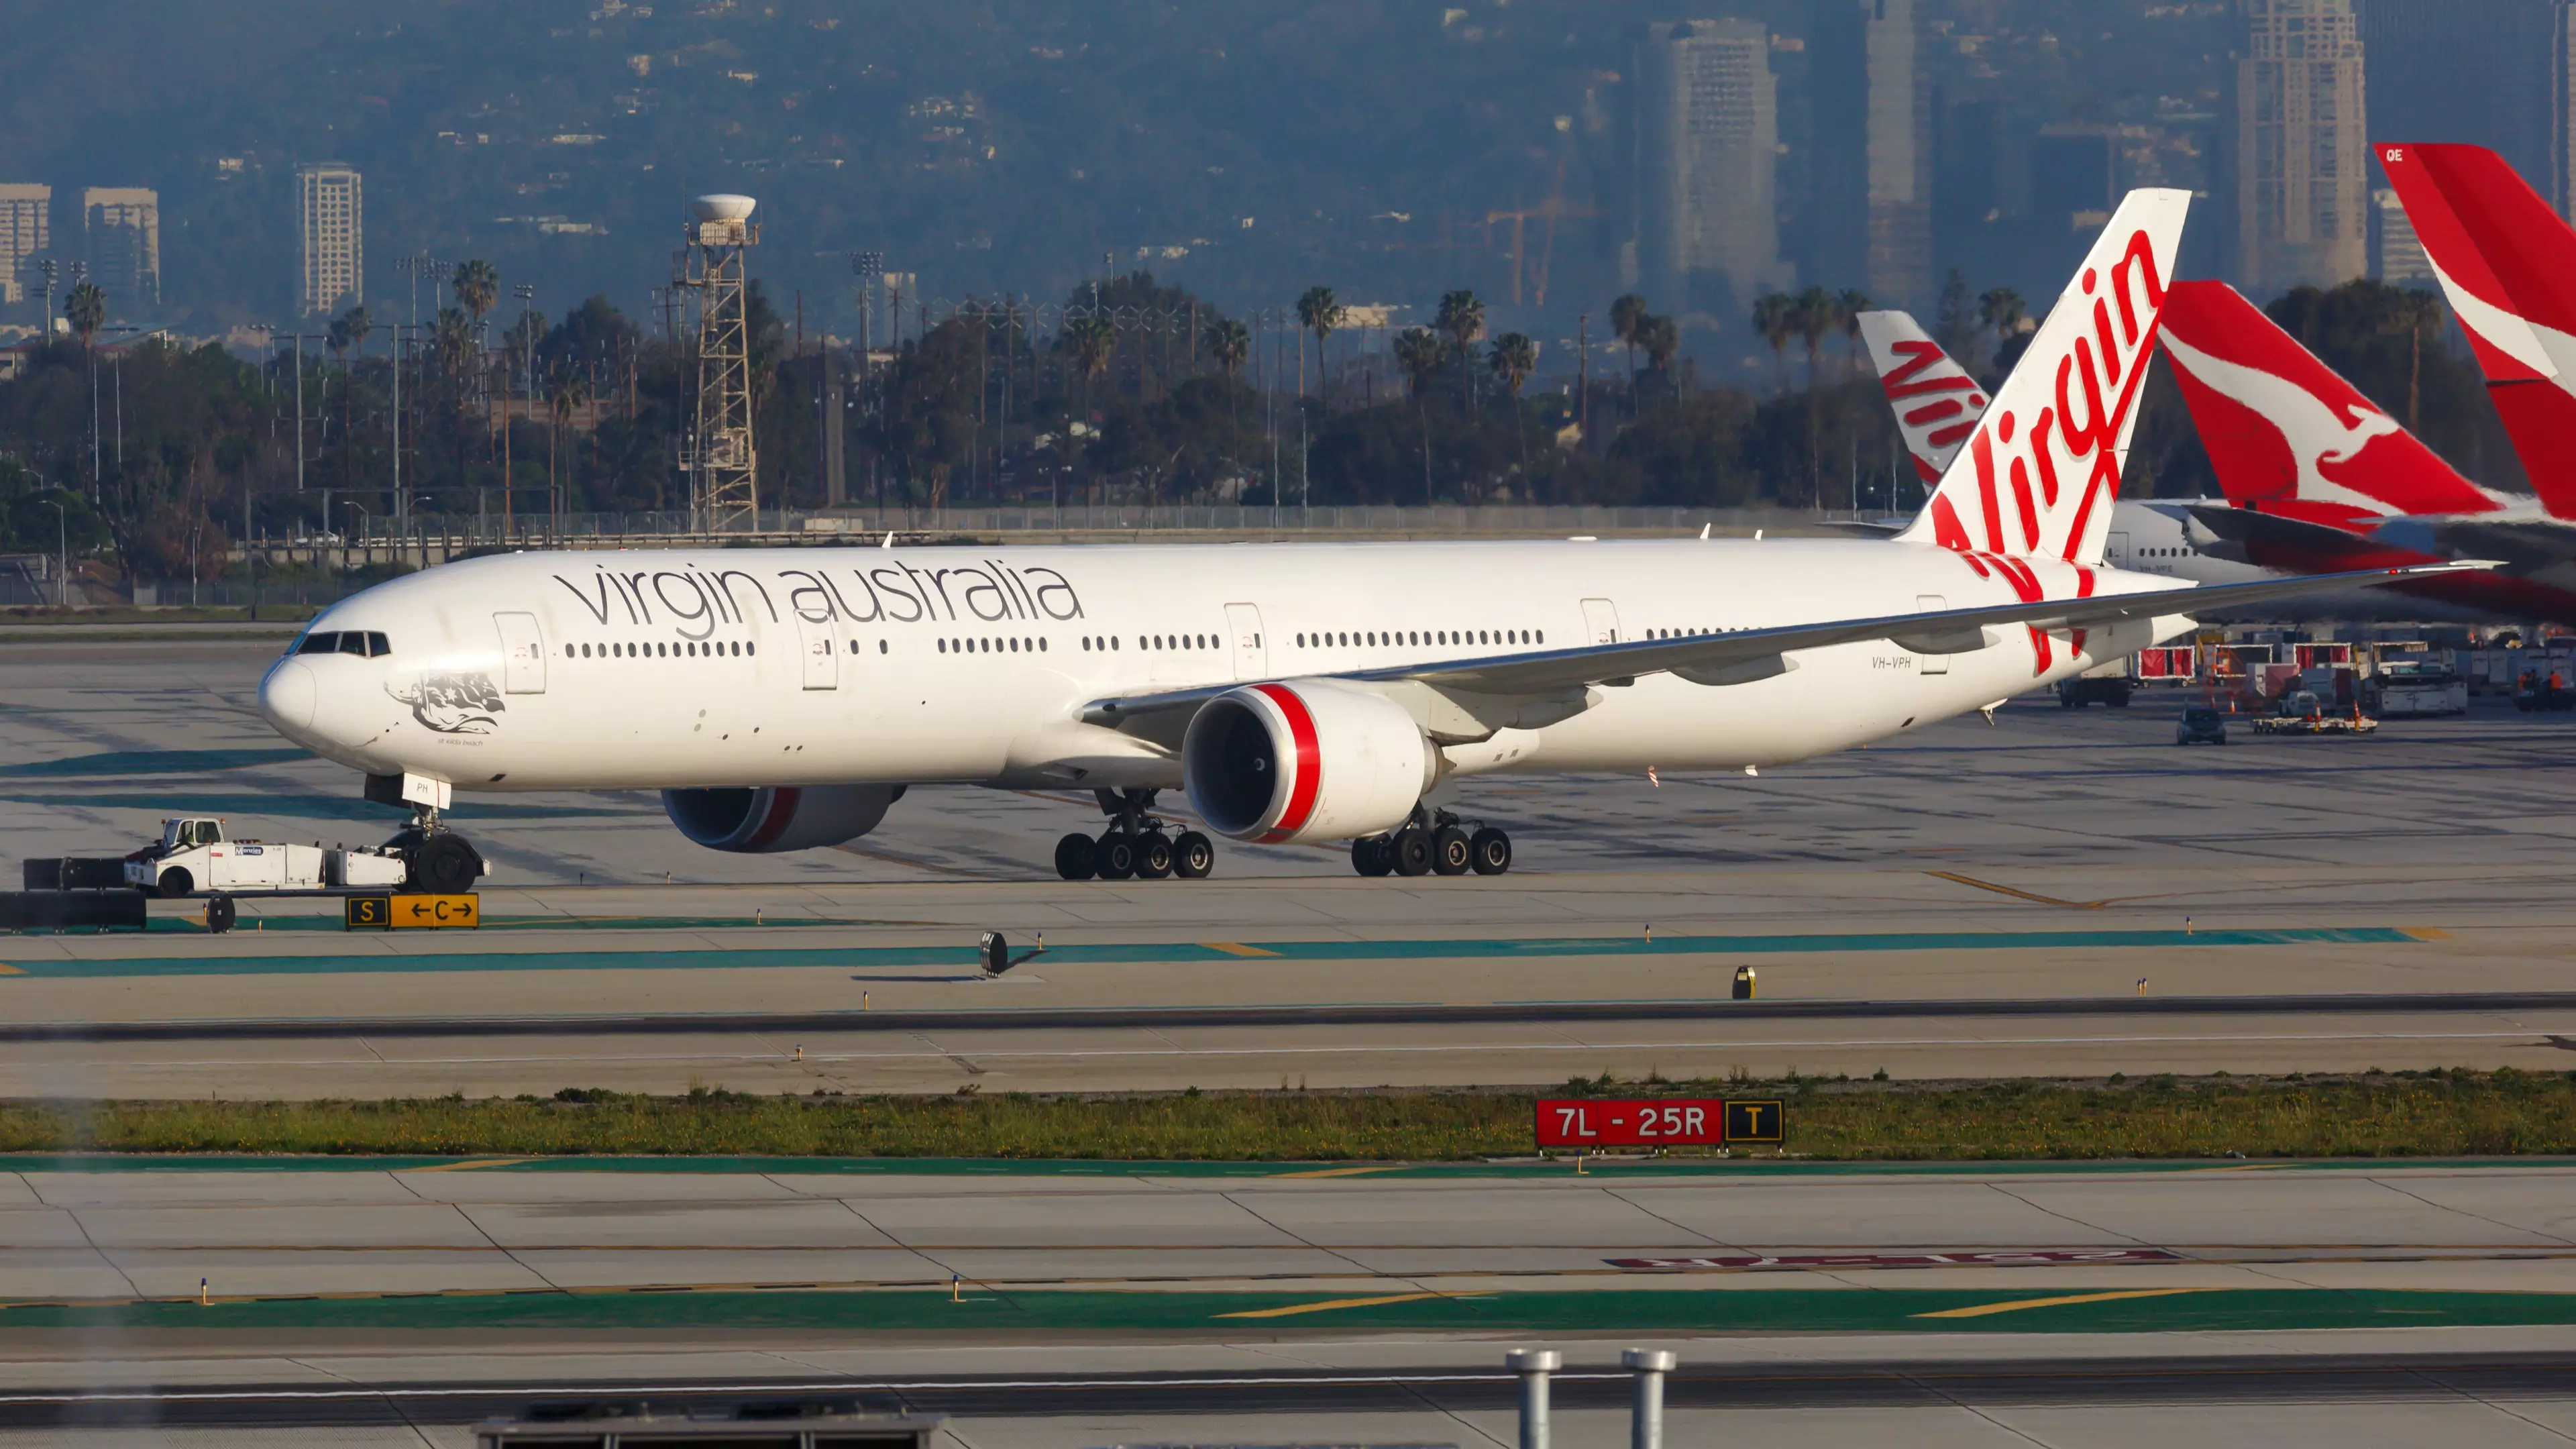 Virgin Australia Business Class Passenger Complains After Being Served 2-Minute Noodles